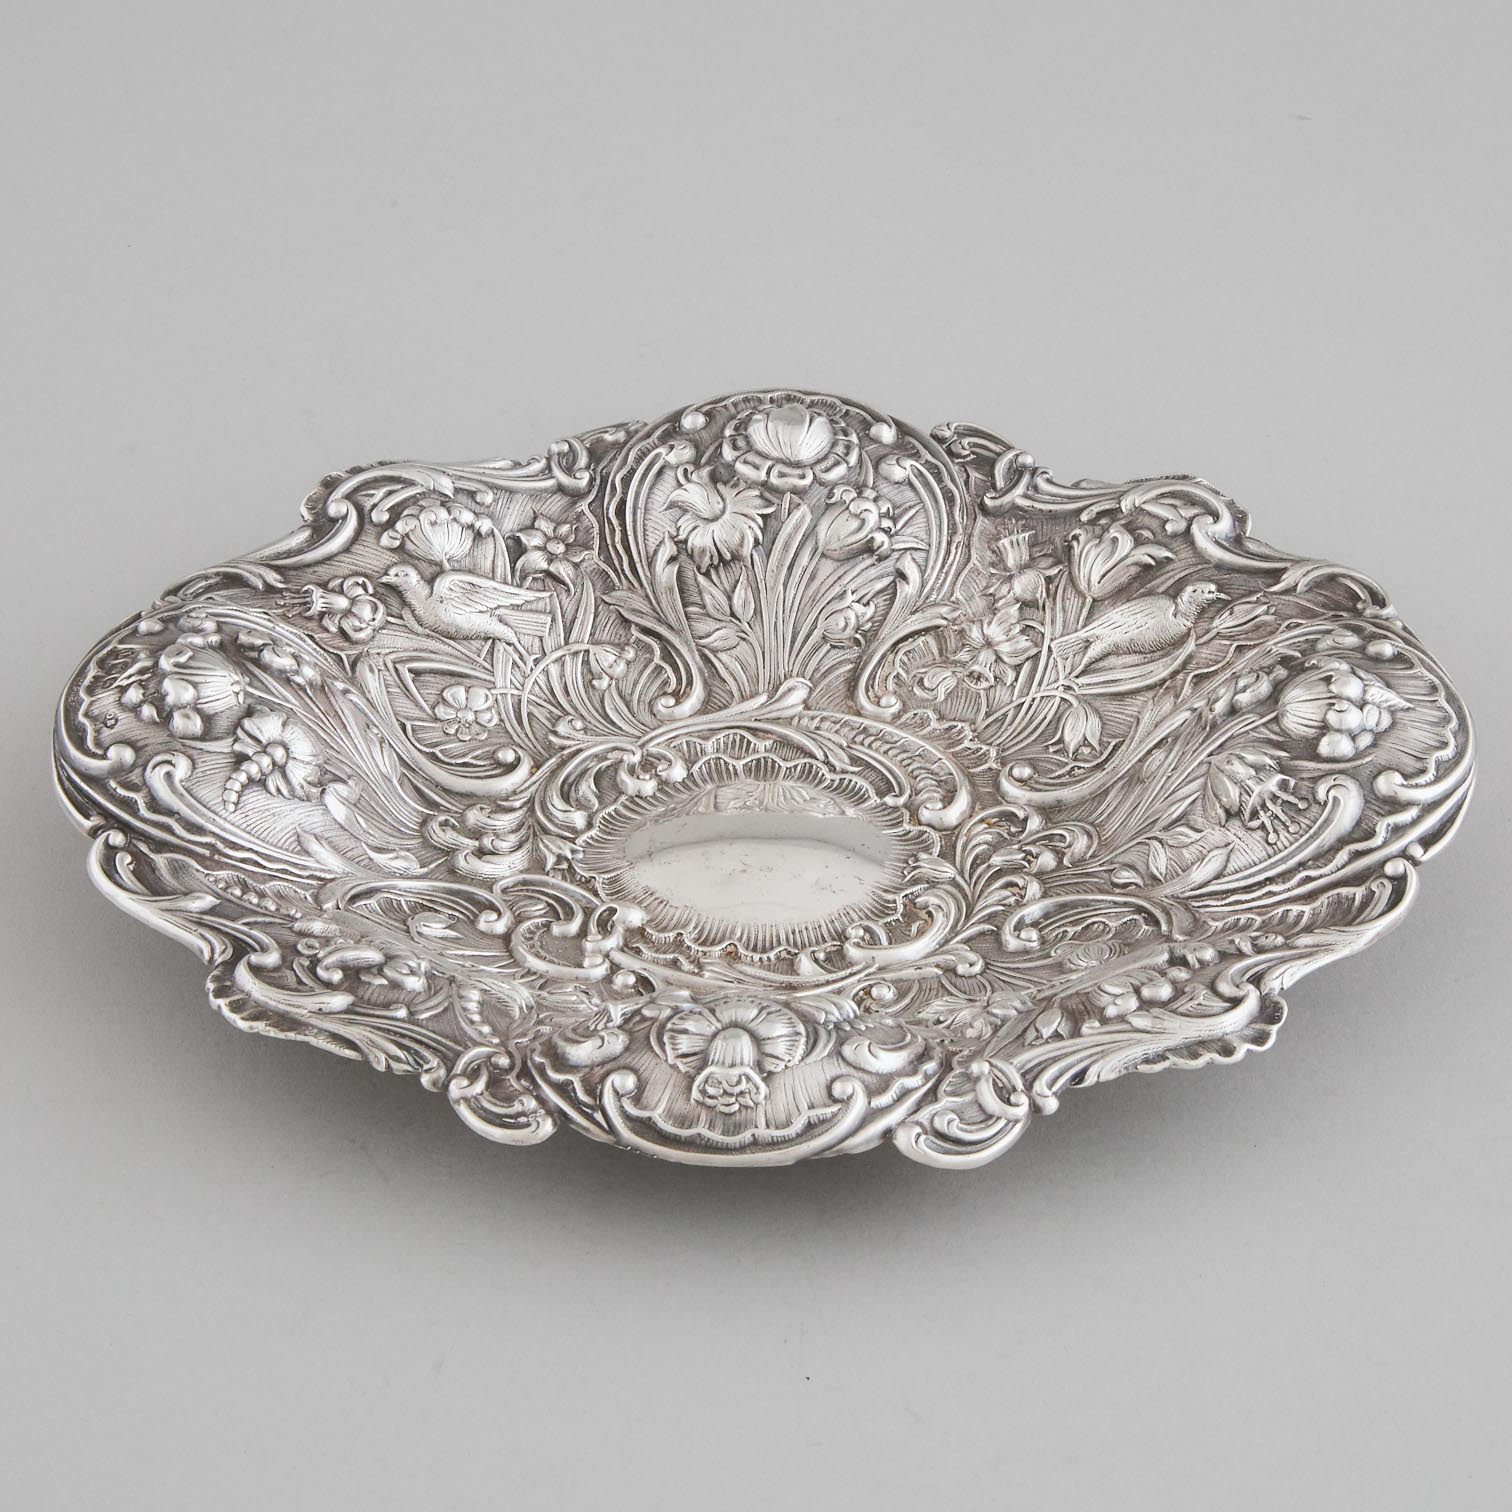 Late Victorian Silver Repoussé Oval Dish, William Comyns, London, 1894